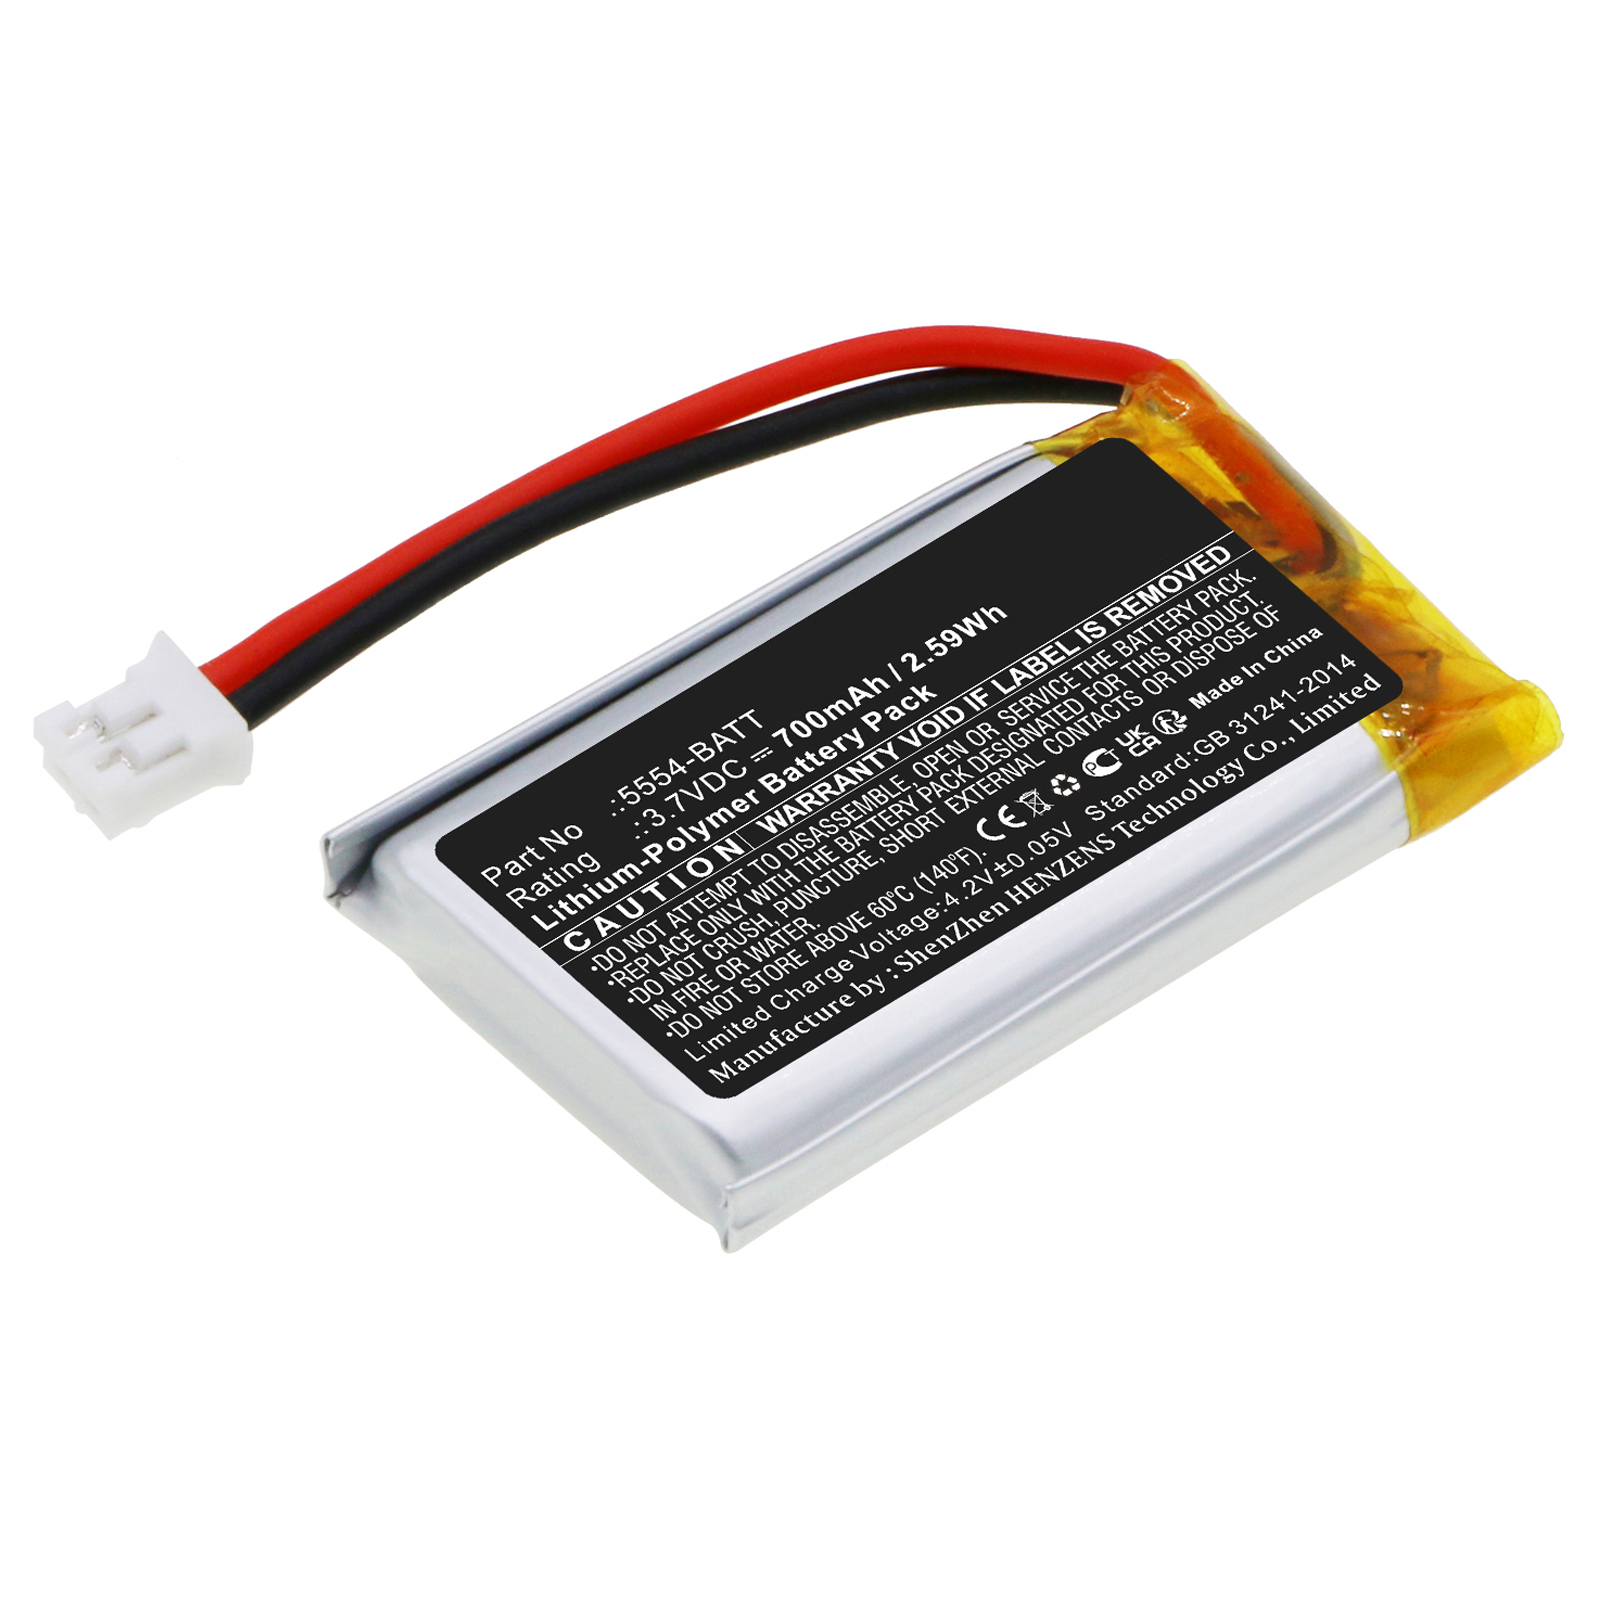 Synergy Digital Flashlight Battery, Compatible with Nightstick 5554-BATT Flashlight Battery (Li-Pol, 3.7V, 700mAh)